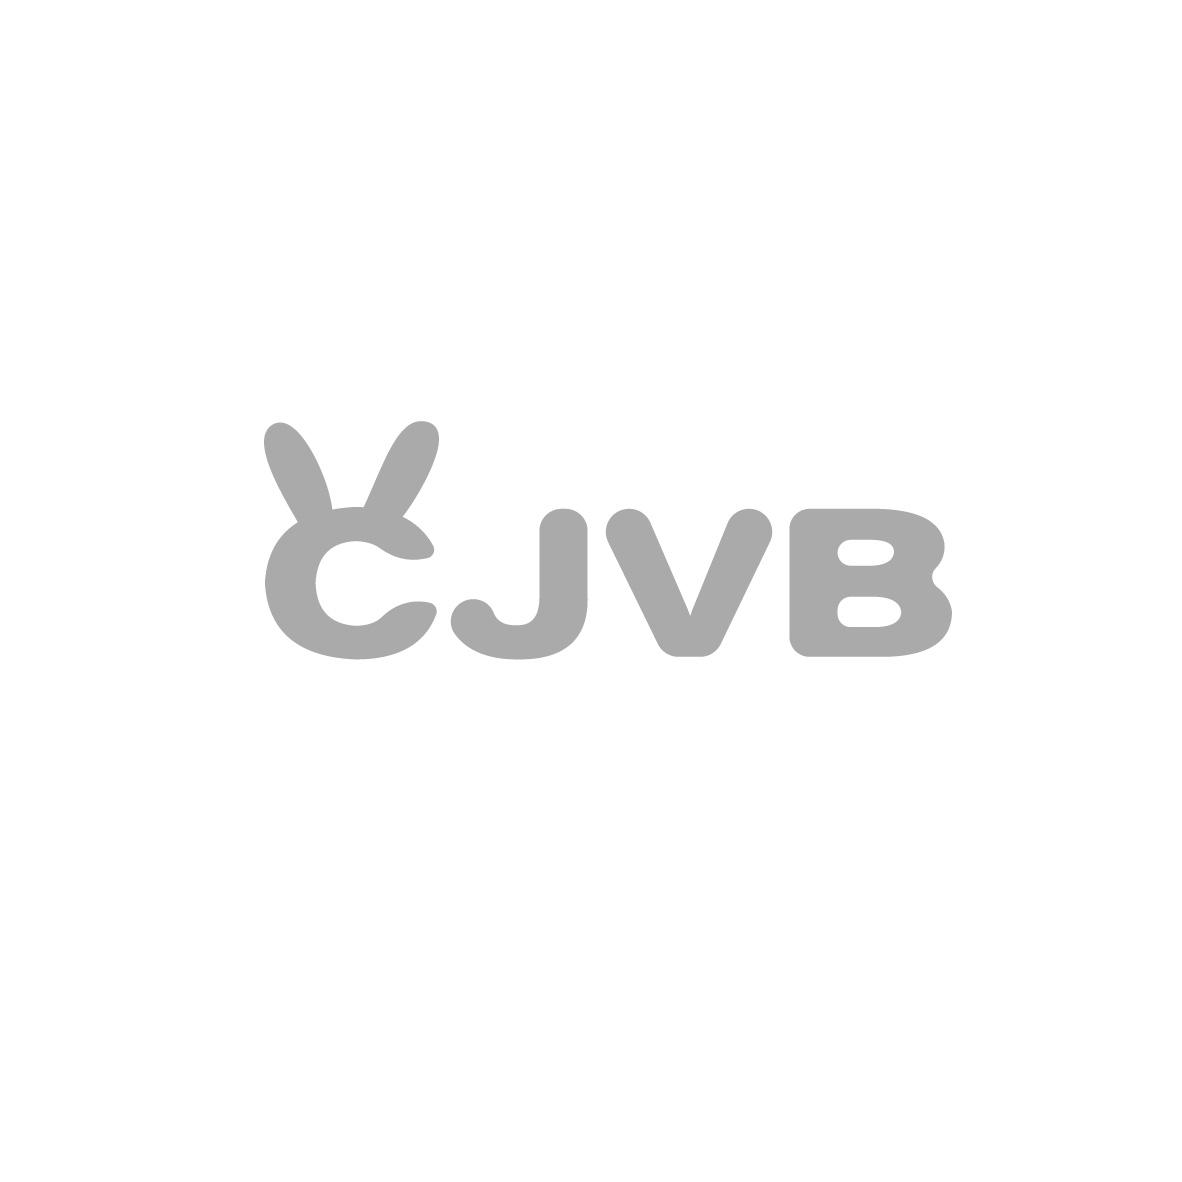 CJVB商标转让